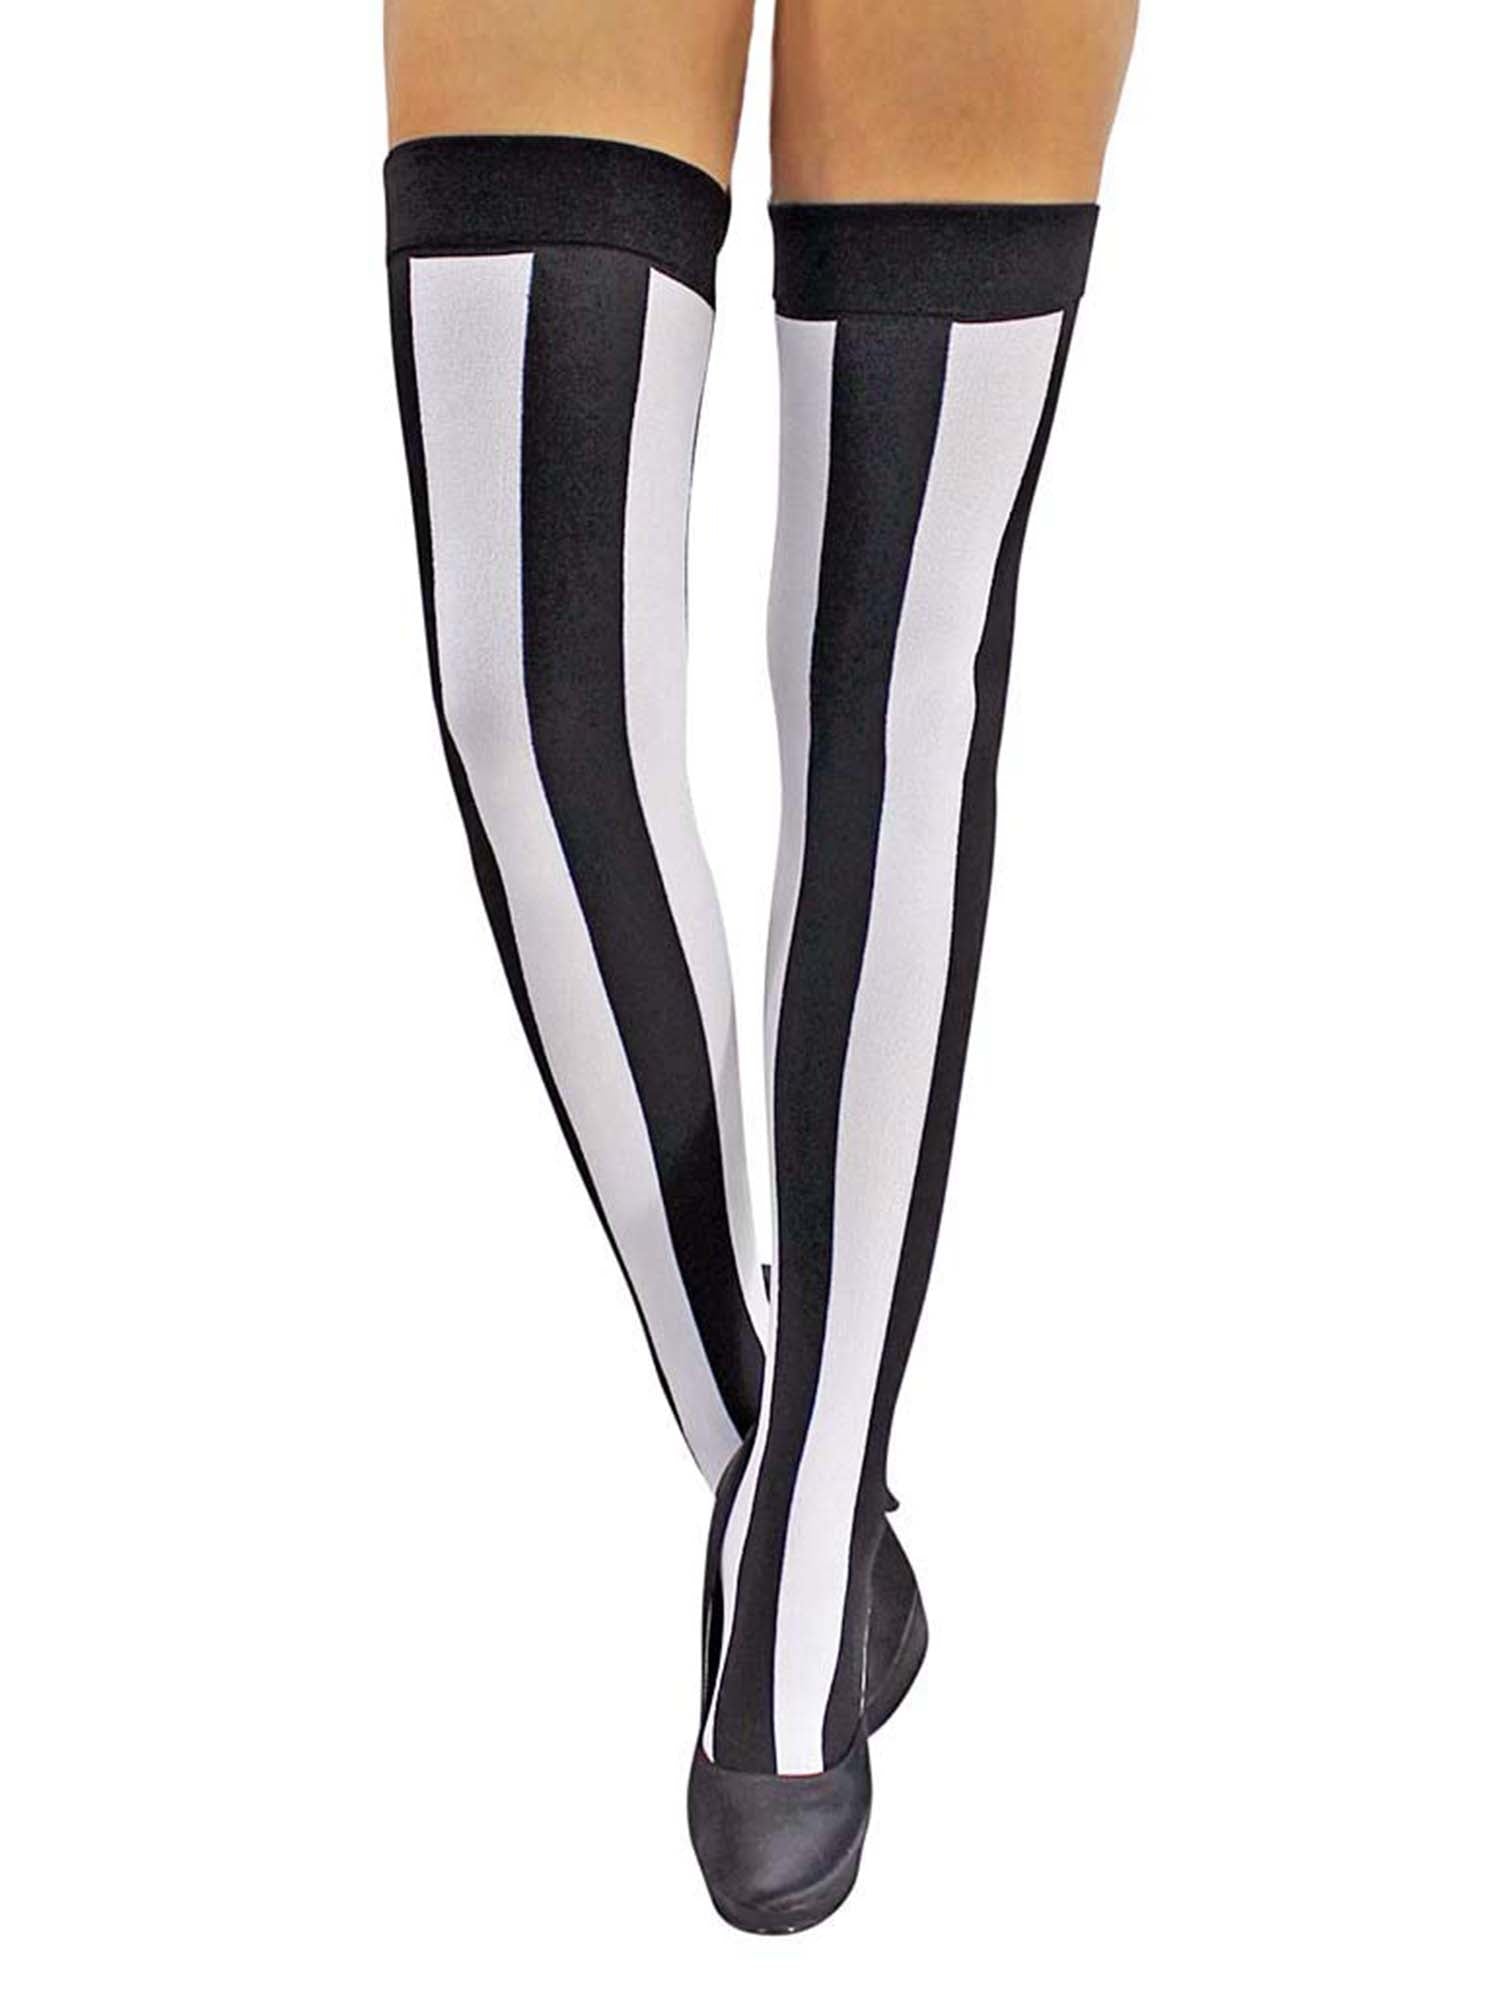 black thigh high socks with white stripes